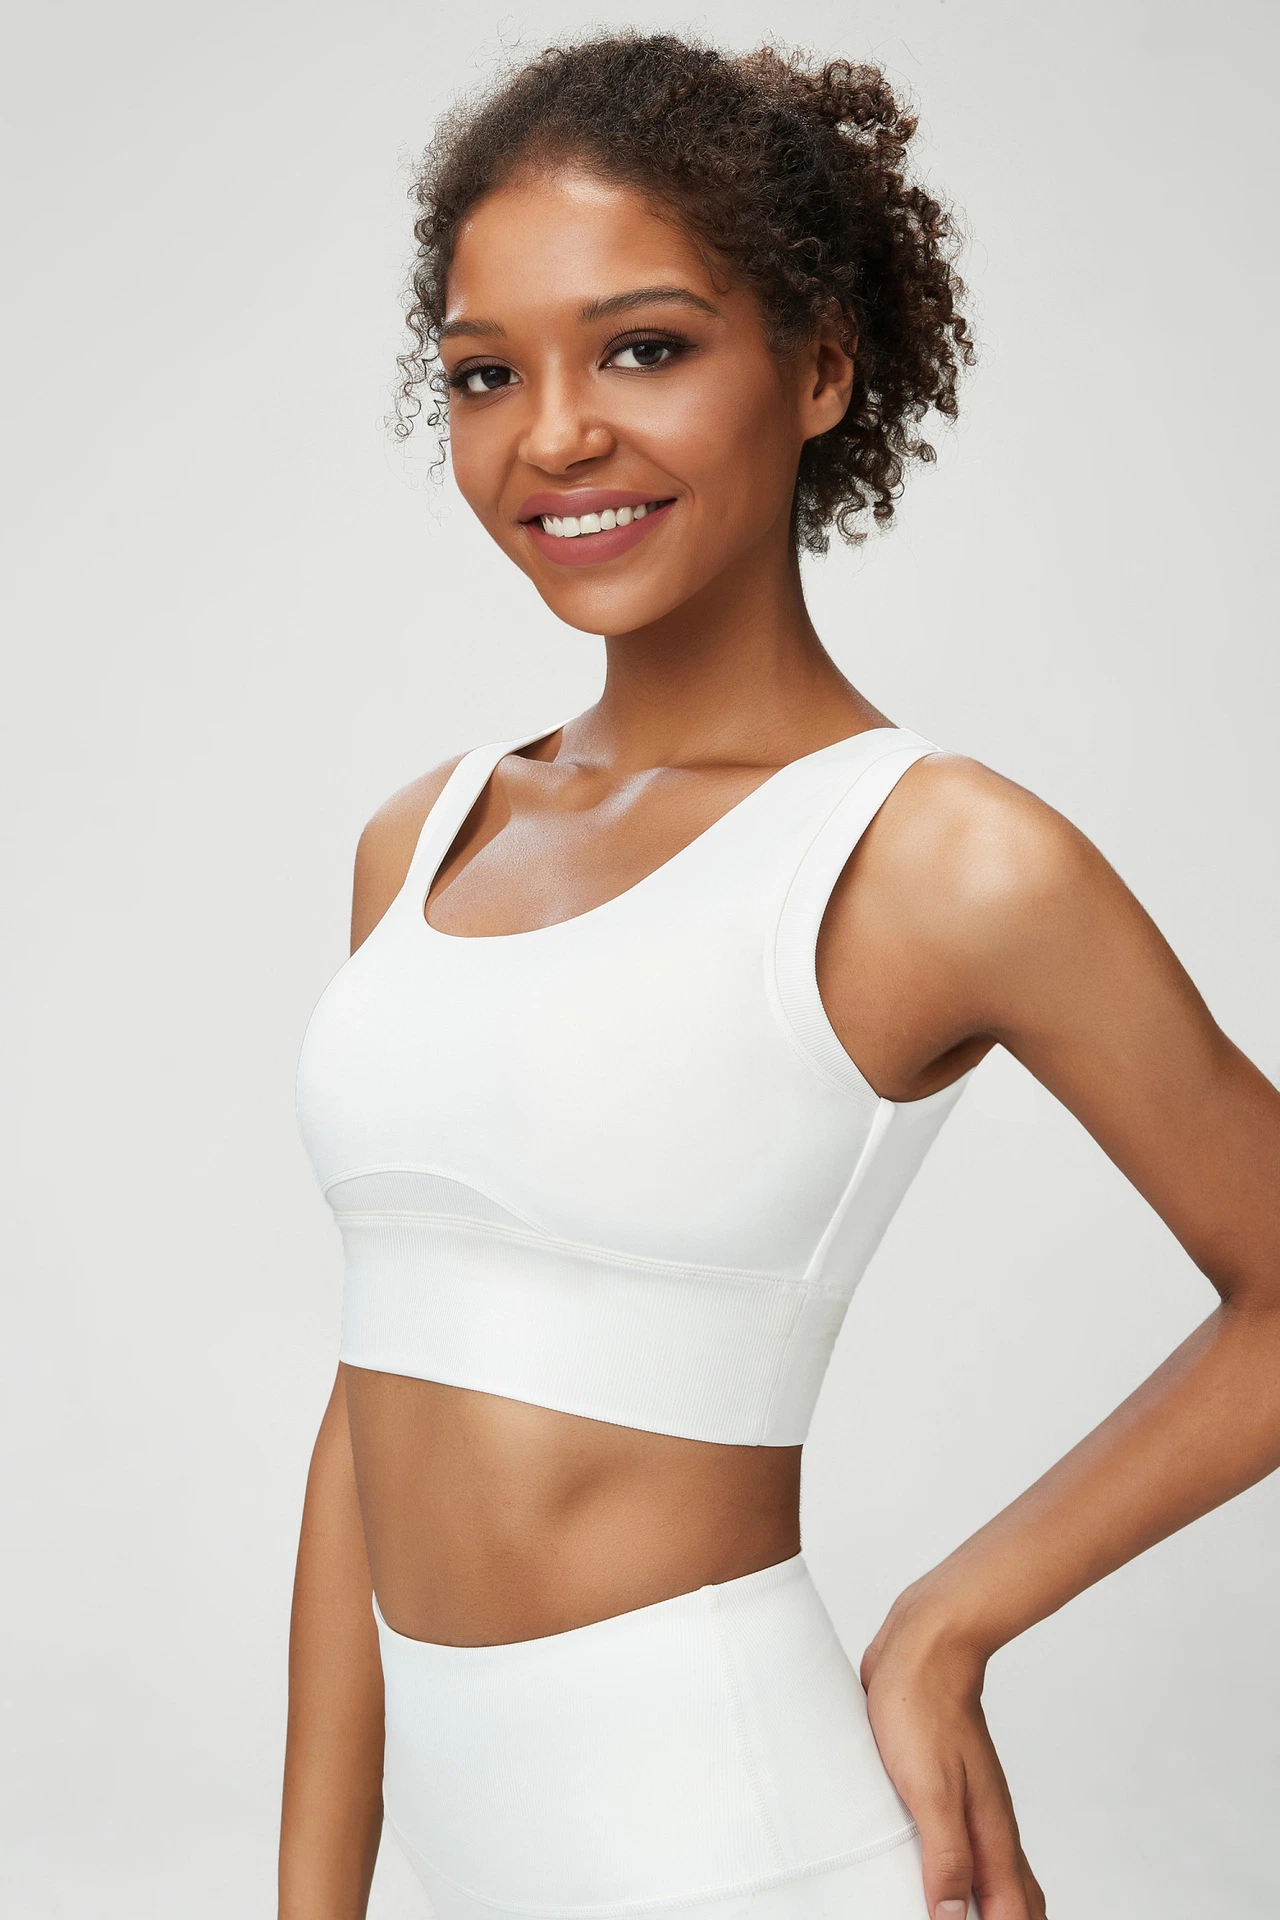 Women Tight Sleeveless Yoga Shirts Sports Fitness Vest Round Neck Running Tank Top Active Wear XL